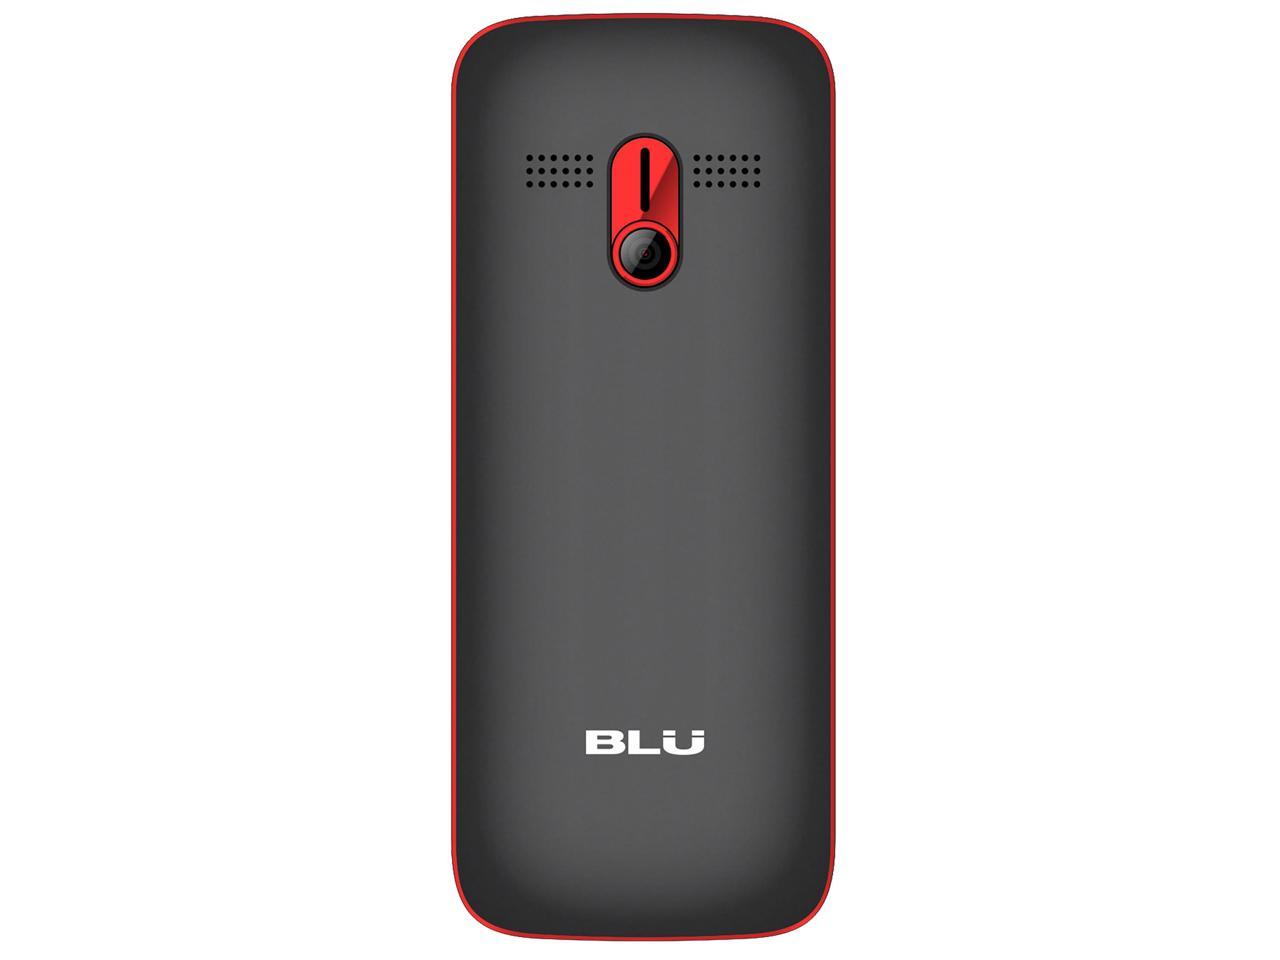 BLU Z4 Z190 Unlocked GSM Feature Phone w/ Built-in Flashlight - Red